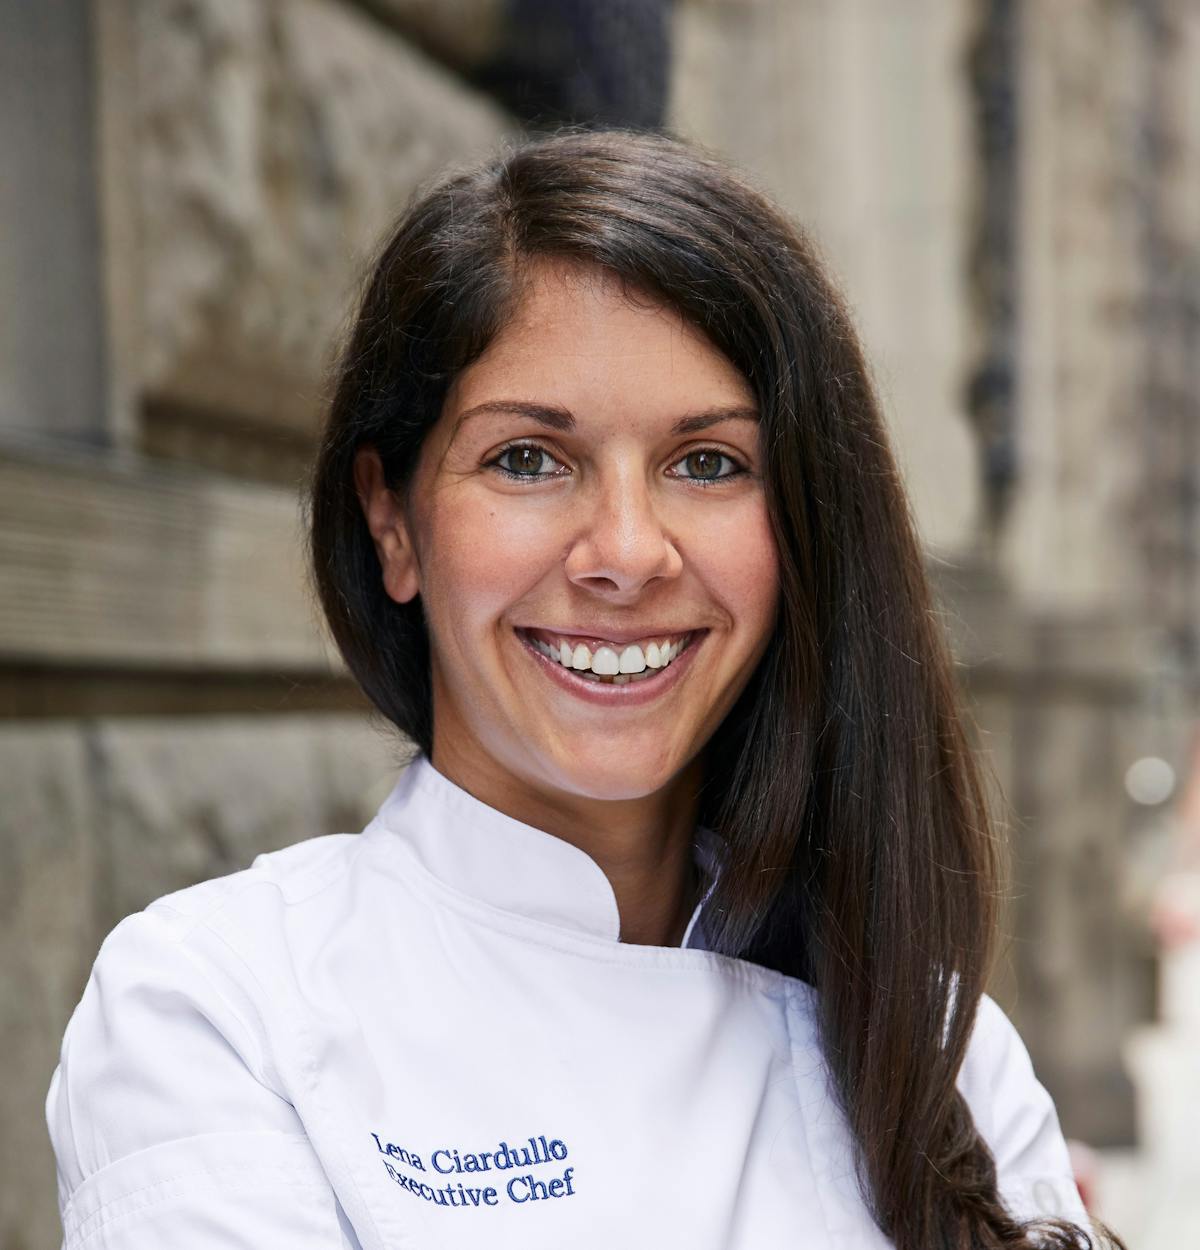 Lena Ciardullo, Executive Chef of Union Square Cafe